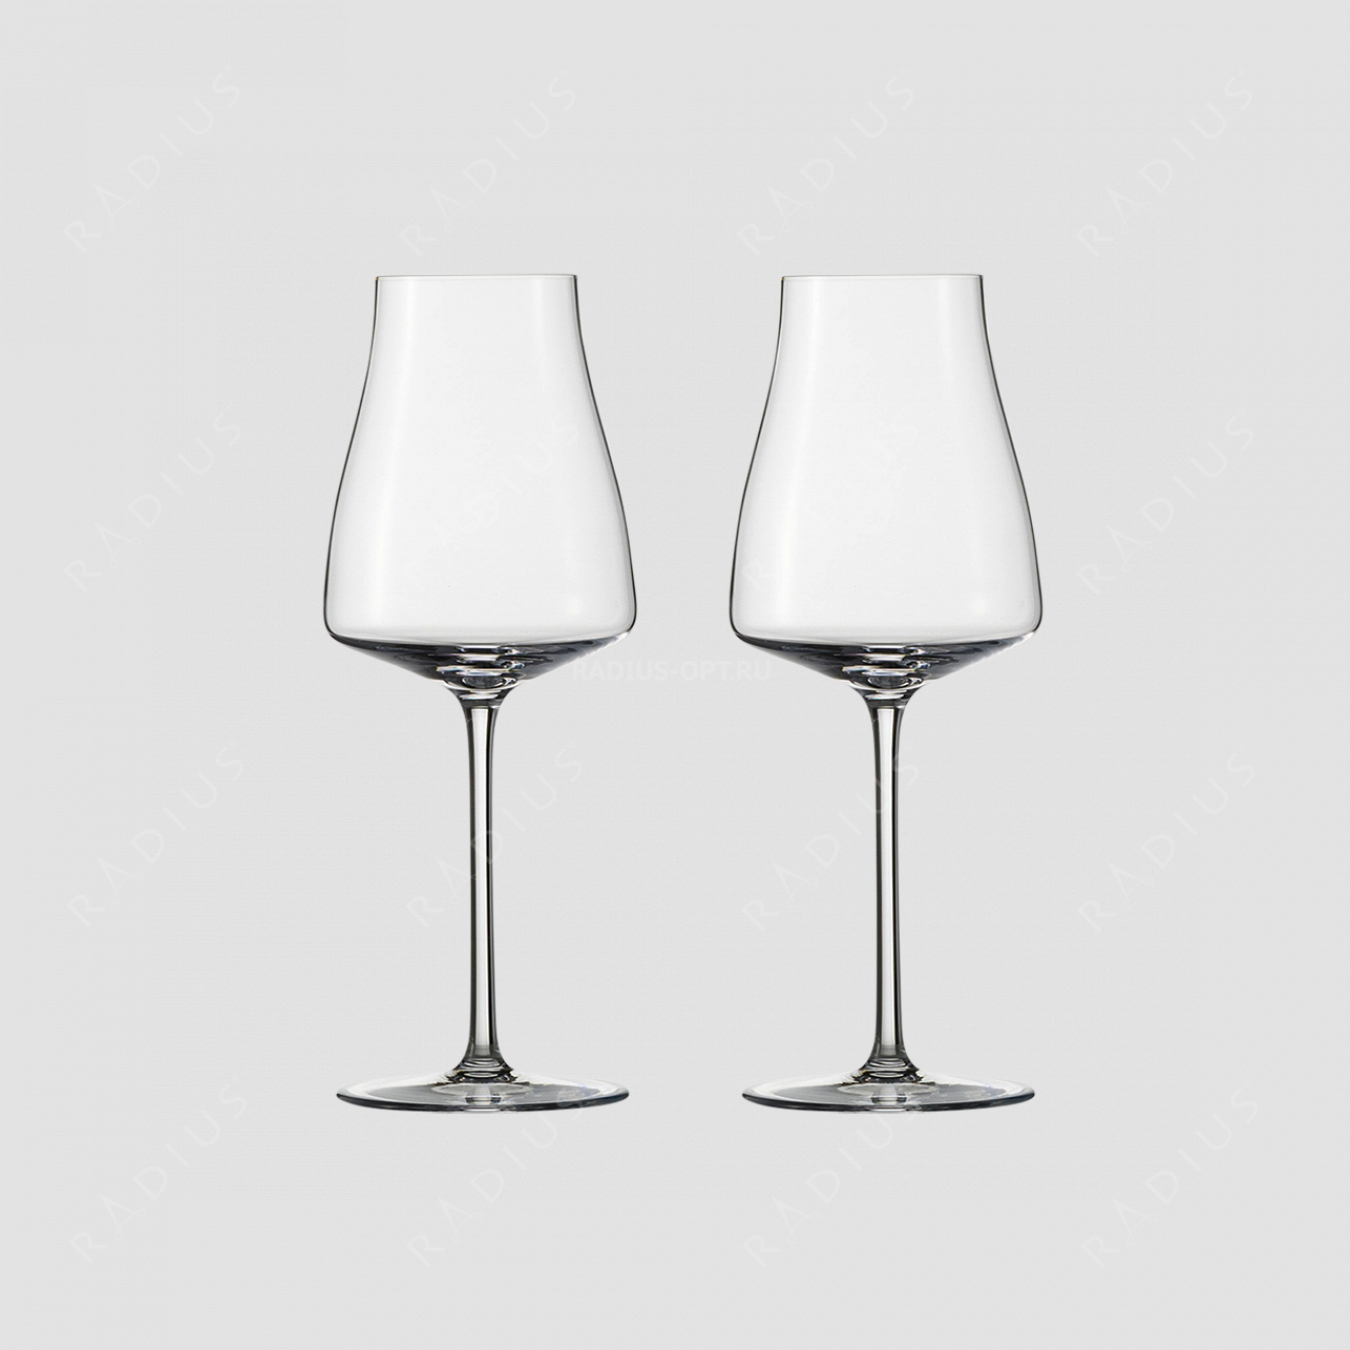 Набор бокалов для белого вина RIESLING, ручная работа, объем 342 мл, 2 шт., серия The Moment, ZWIESEL GLAS, Германия